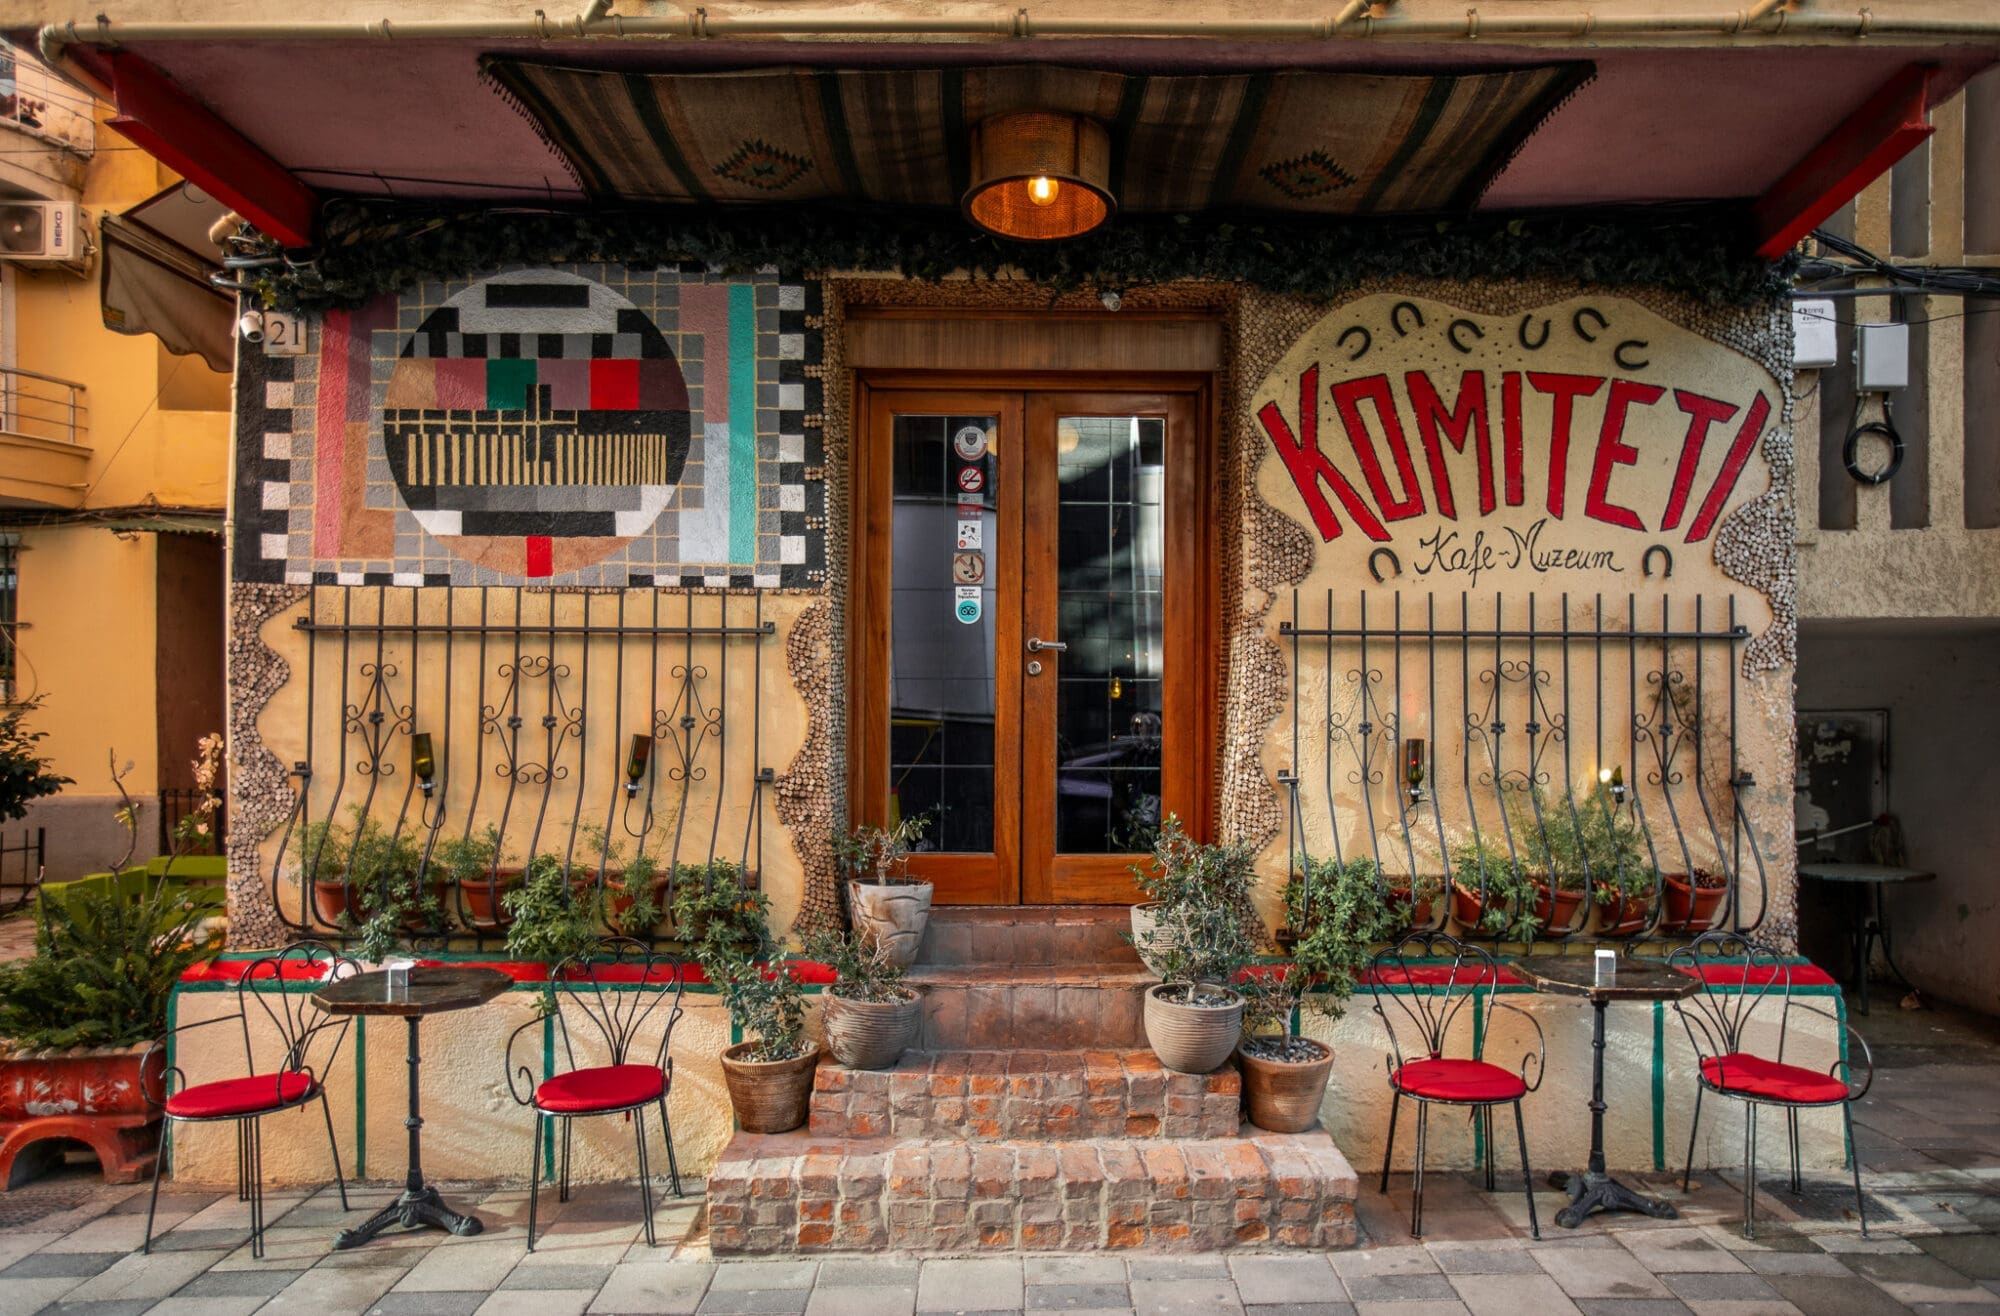 The exterior of quirky bar and cafe Komiteti in Tirana, Albania